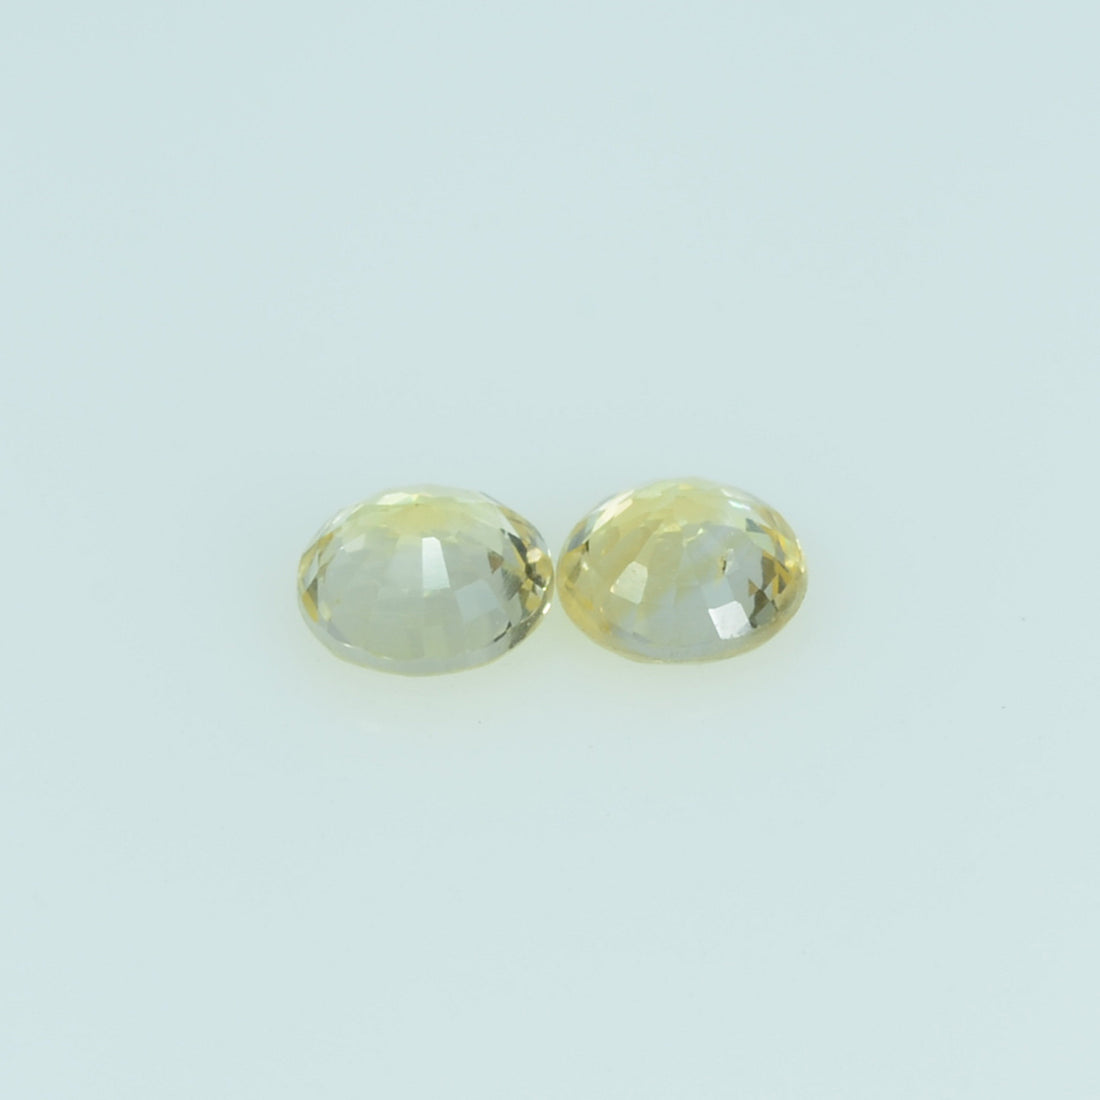 3.5 mm Natural Yellow Sapphire Loose Gemstone Round Cut - Thai Gems Export Ltd.